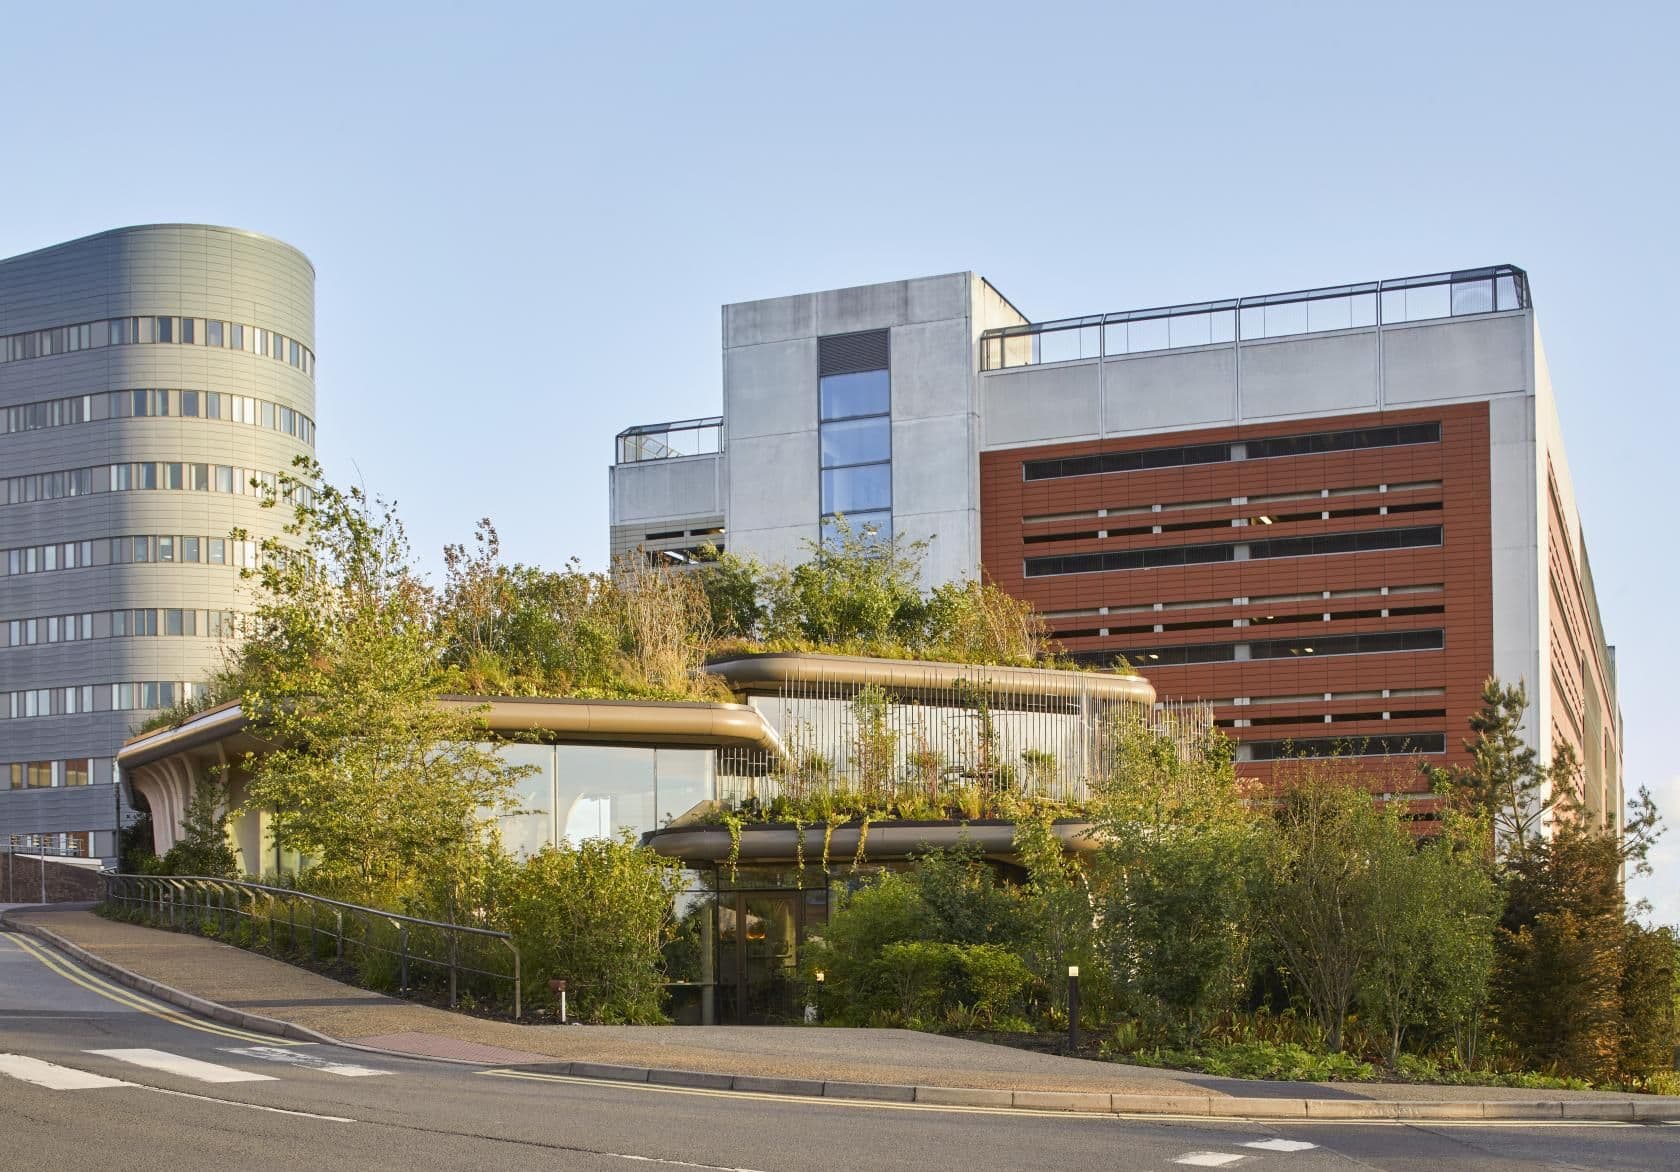 Health Center by Thomas Heatherwick Designed as Three Massive Planters